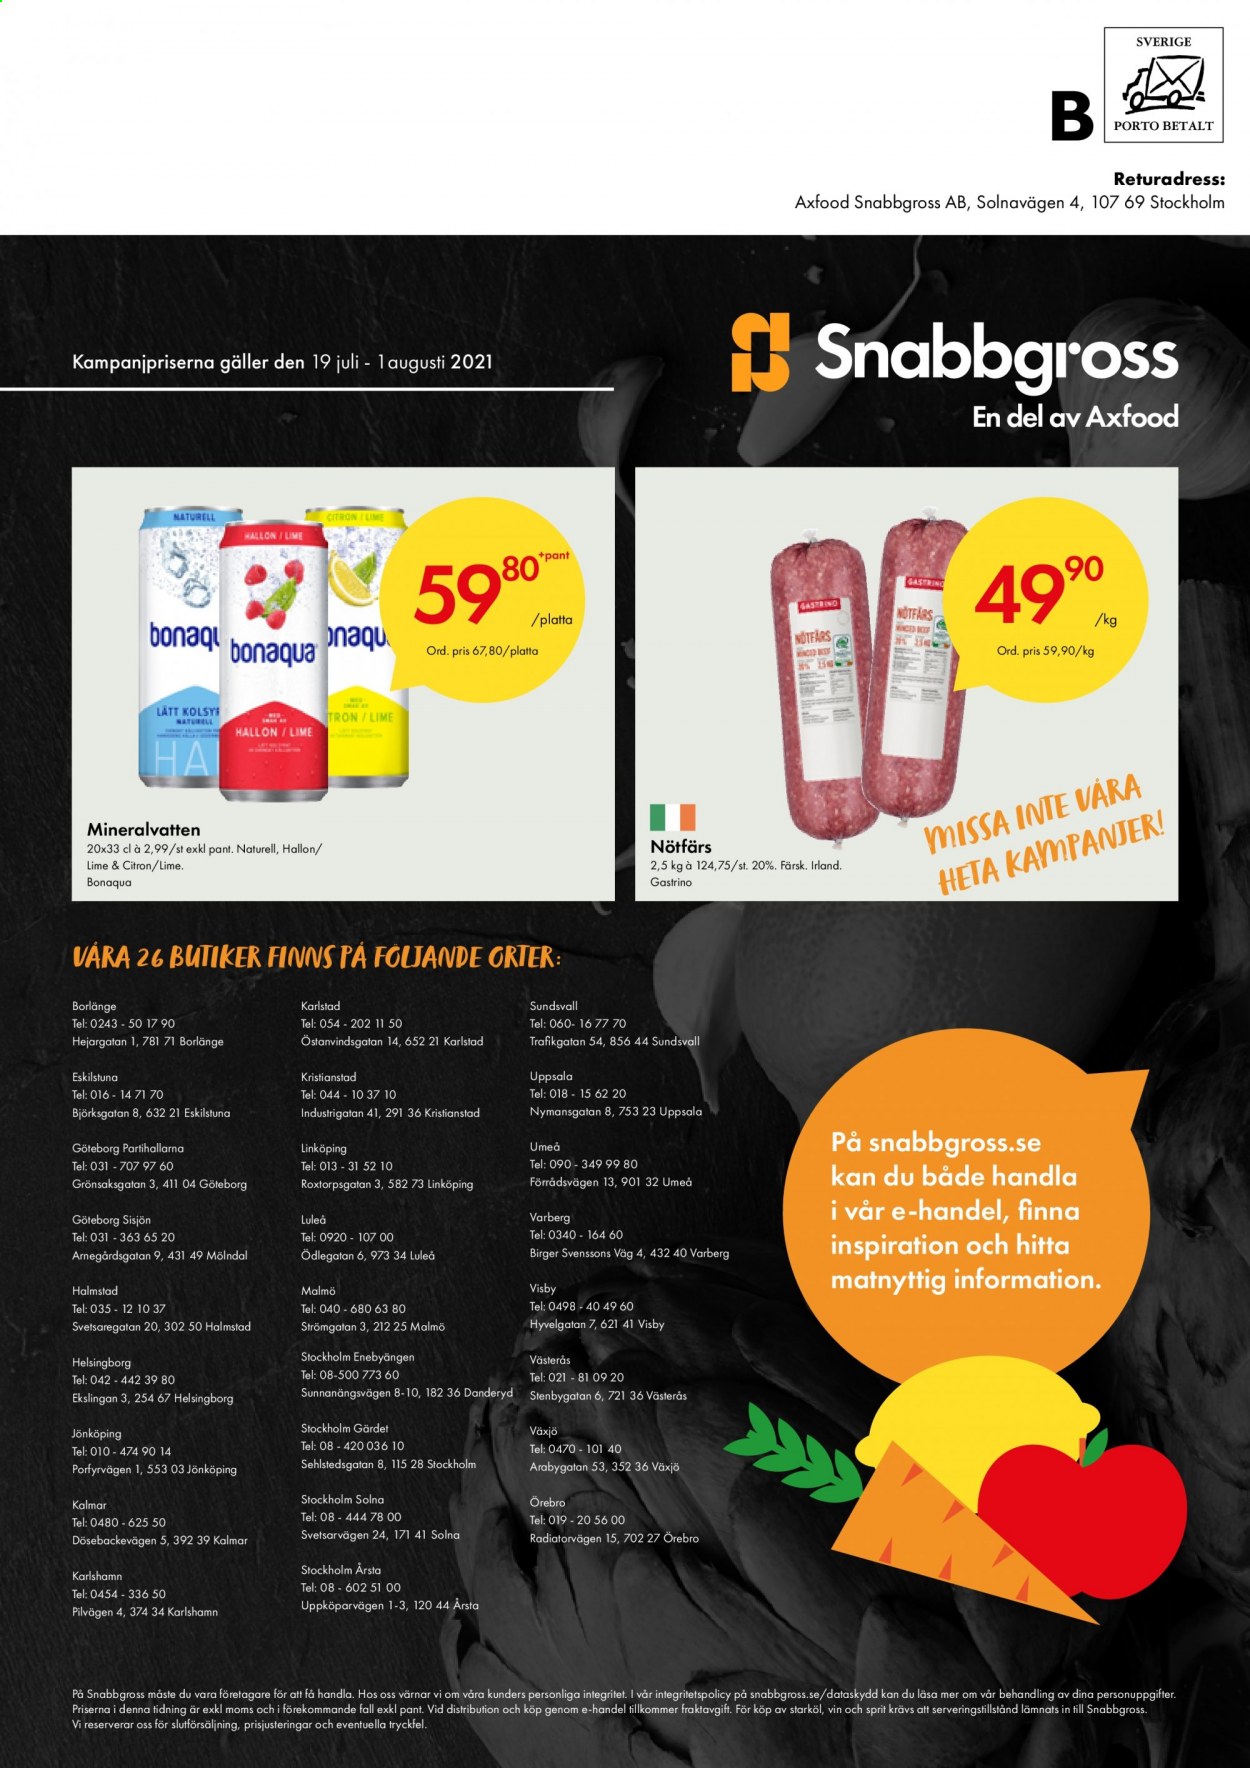 Axfood Snabbgross reklamblad - 19/7 2021 - 1/8 2021.